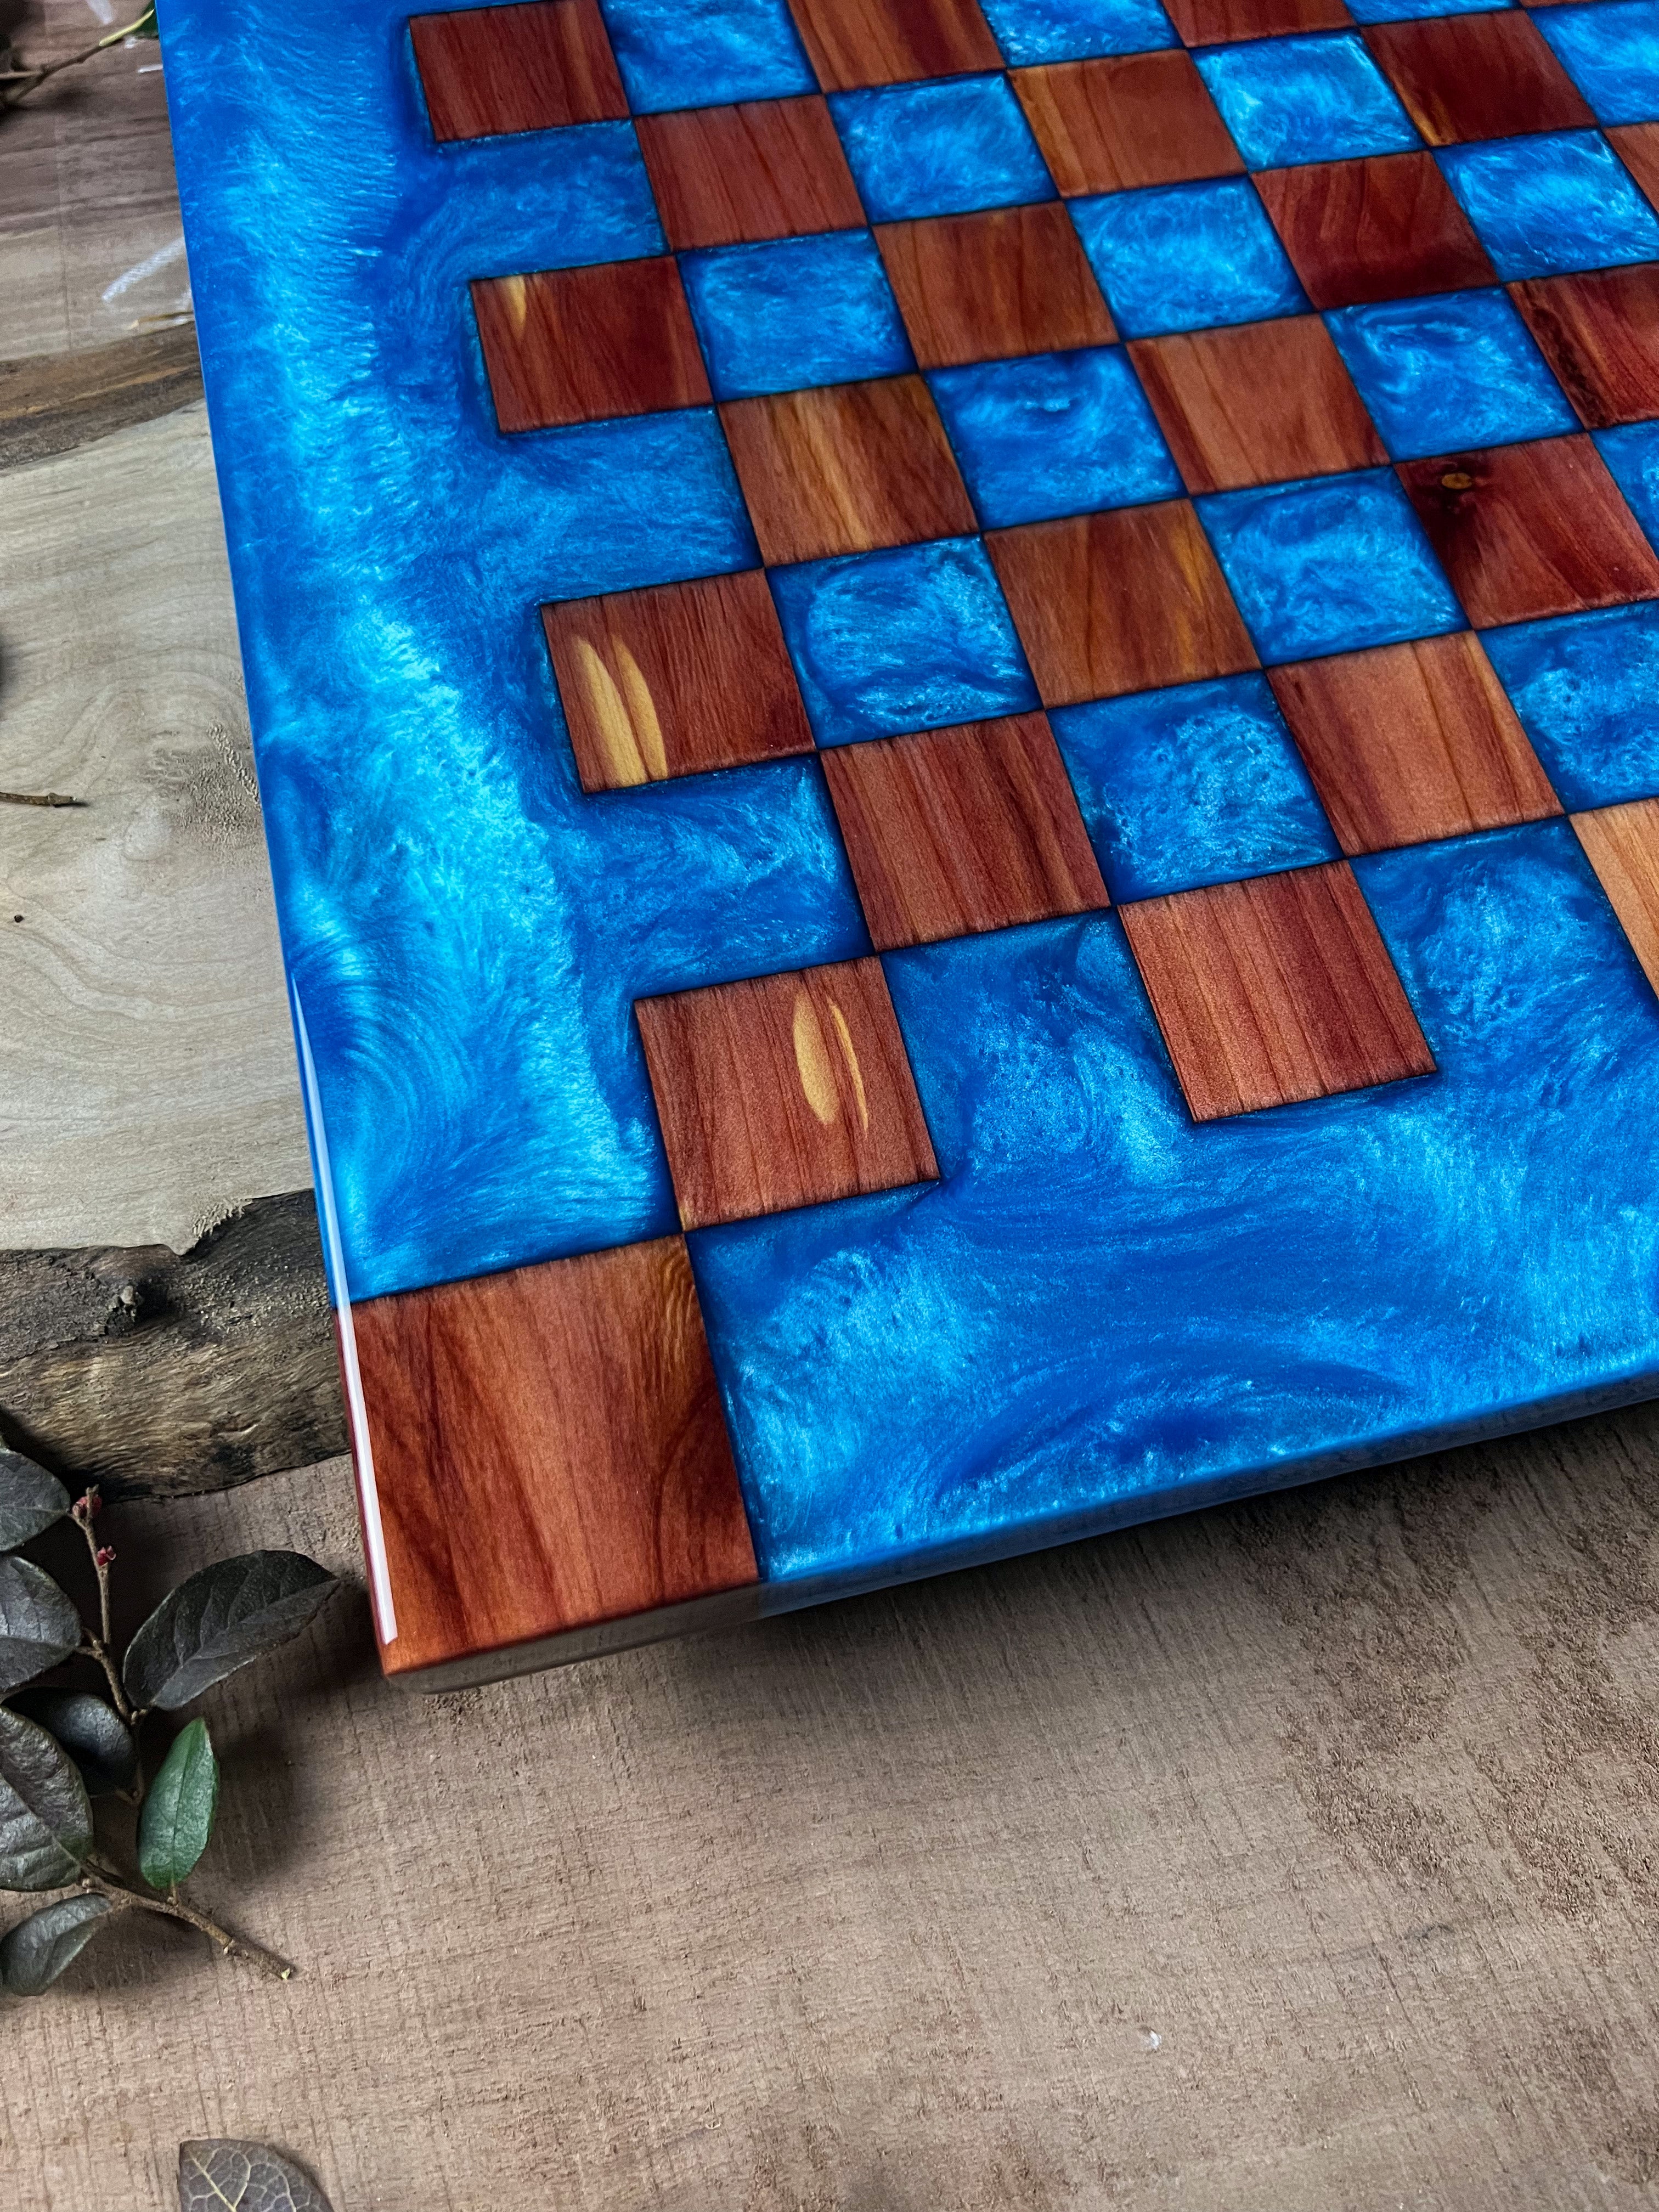 Aromatic Cedar Caribbean Blue Chess Board